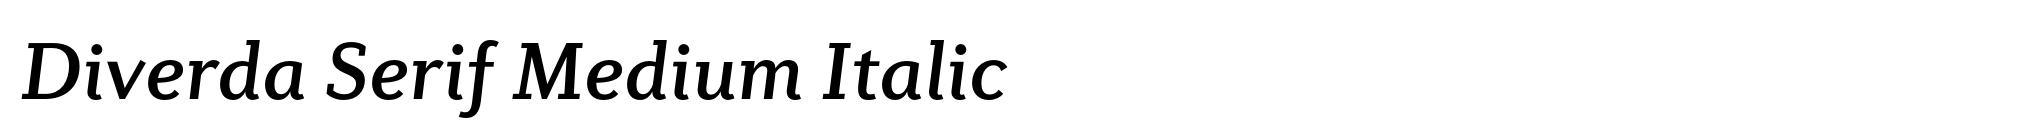 Diverda Serif Medium Italic image